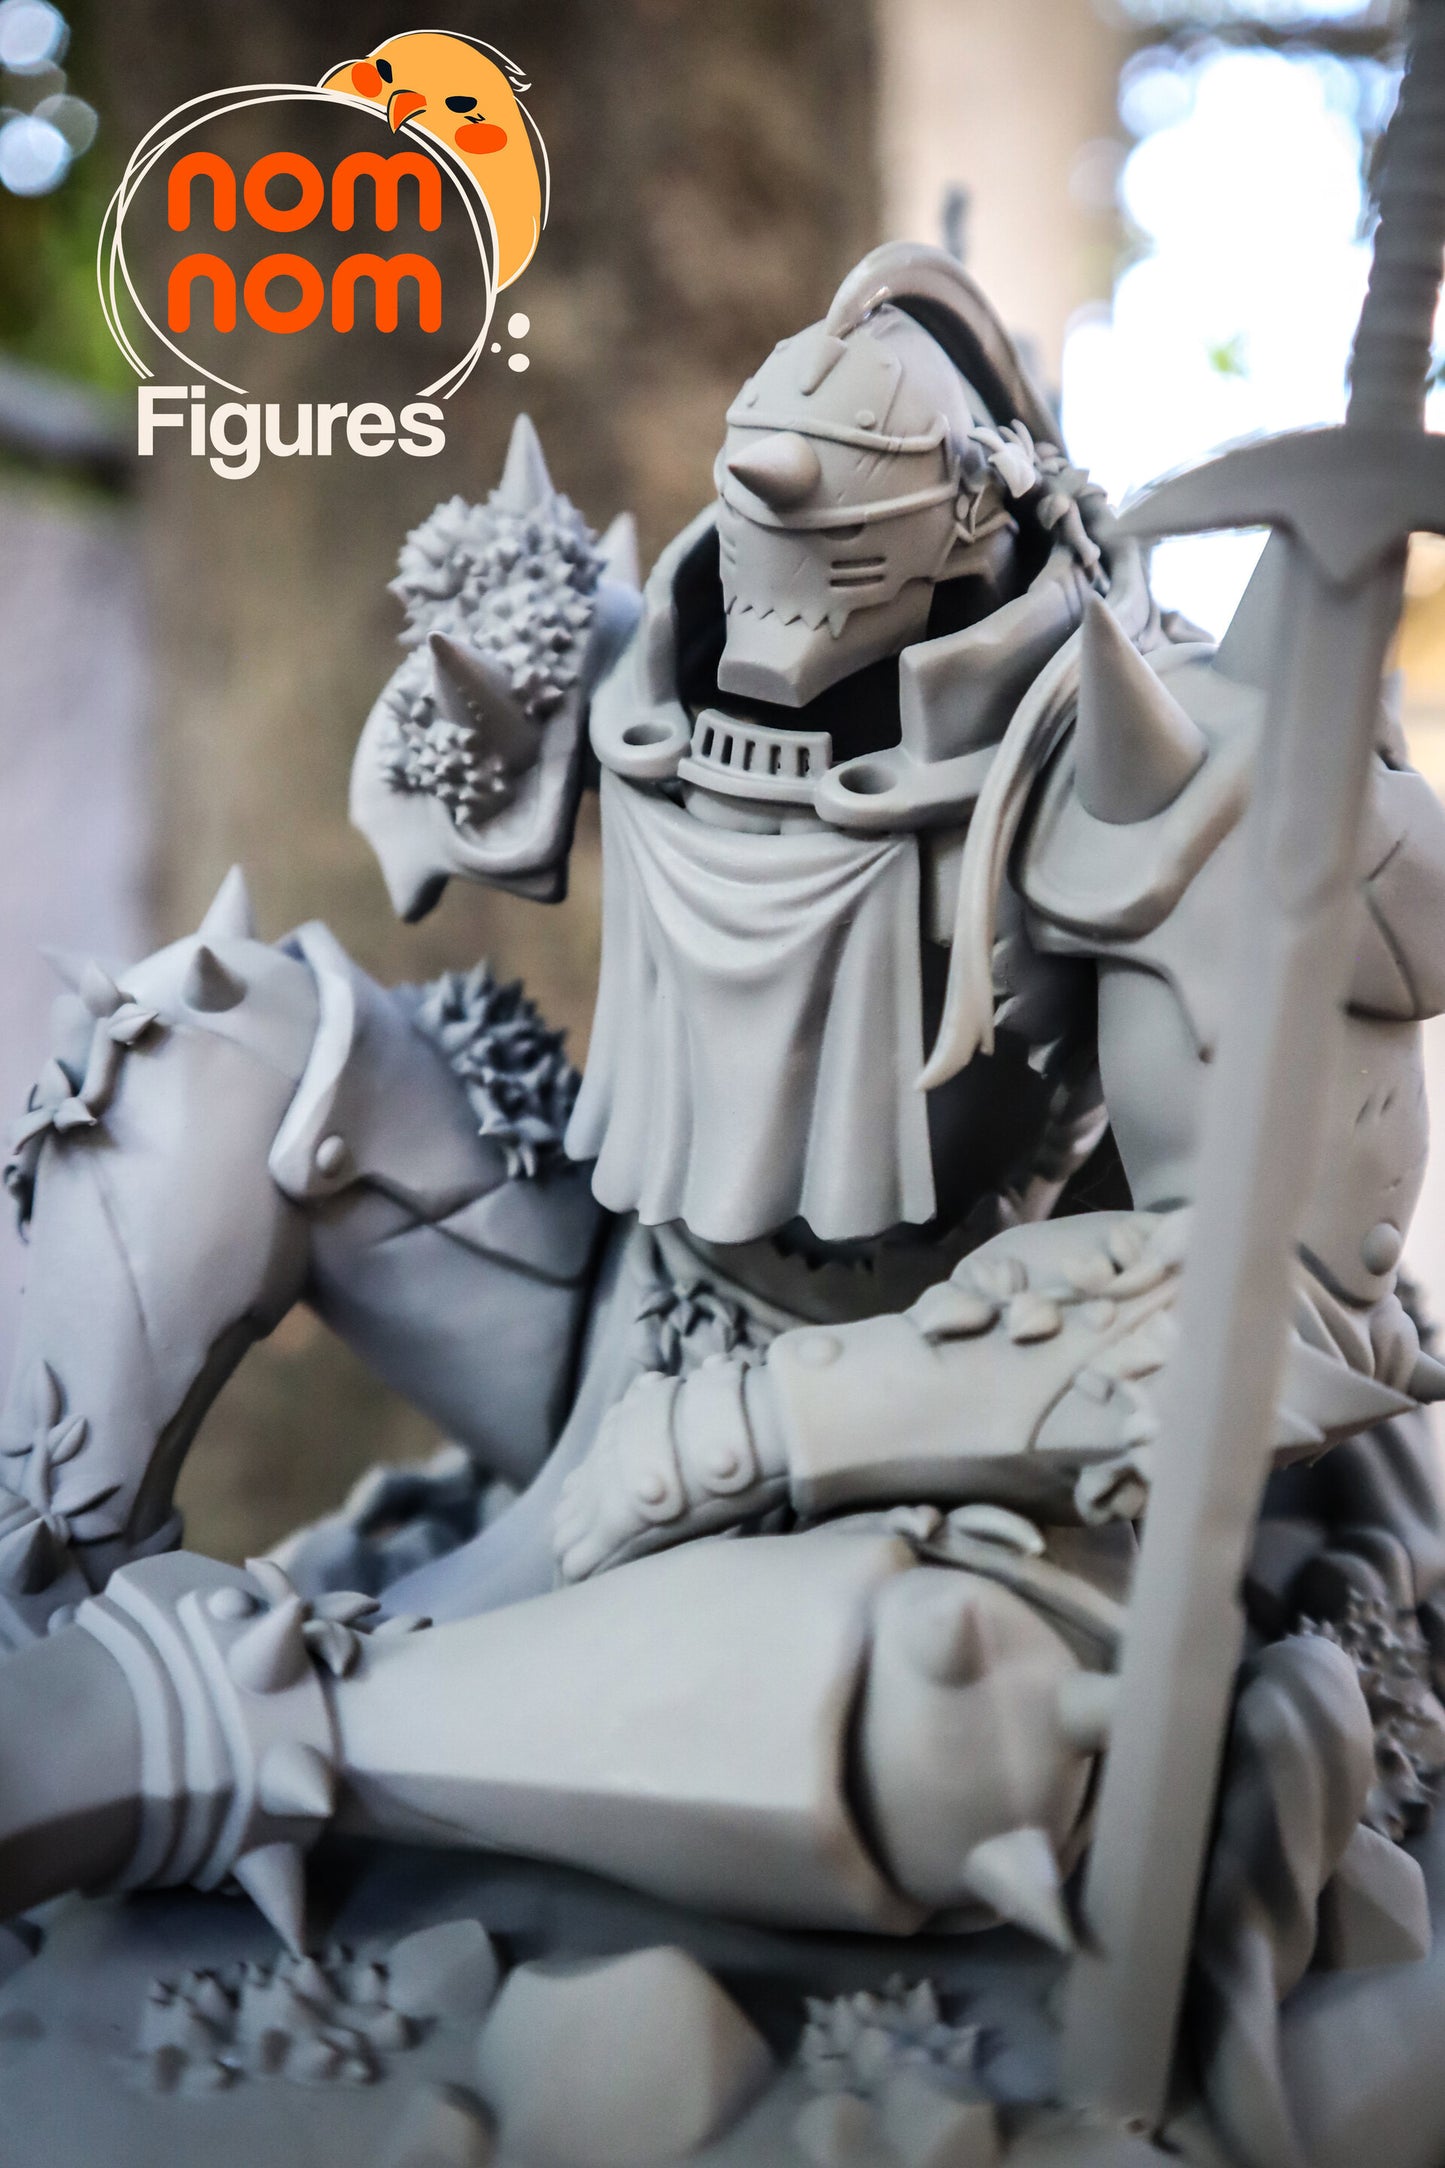 Alphonse - Fullmetal Alchemist 3D Printed Fanmade Model by Nomnom Figures